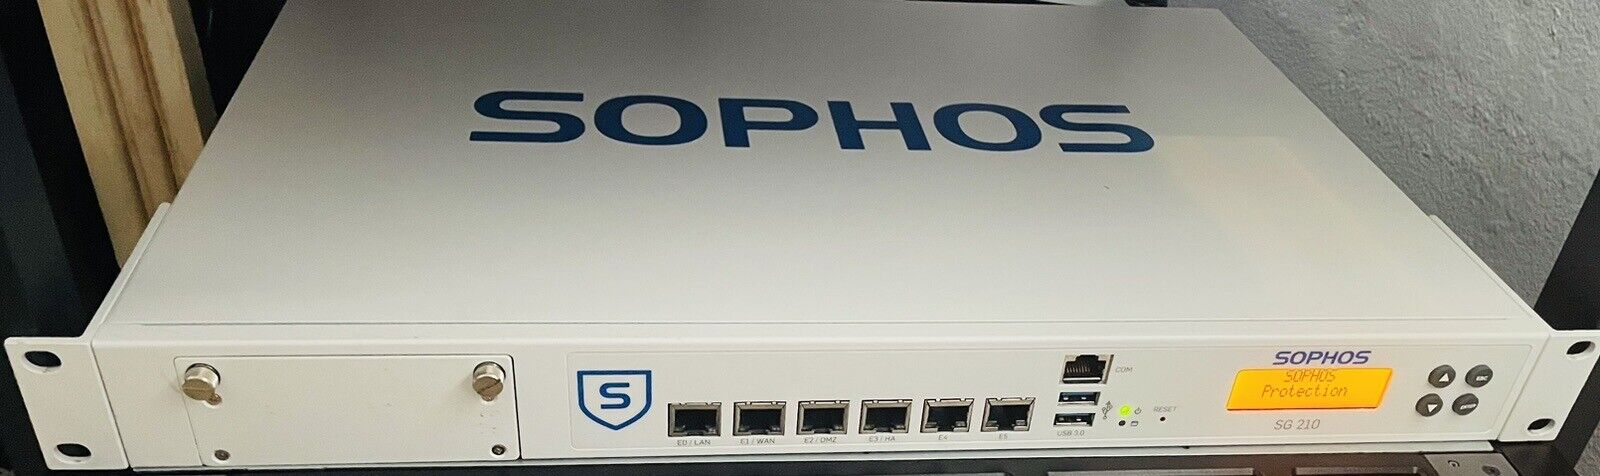 Sg 210 Sophos OPNsense Firewall